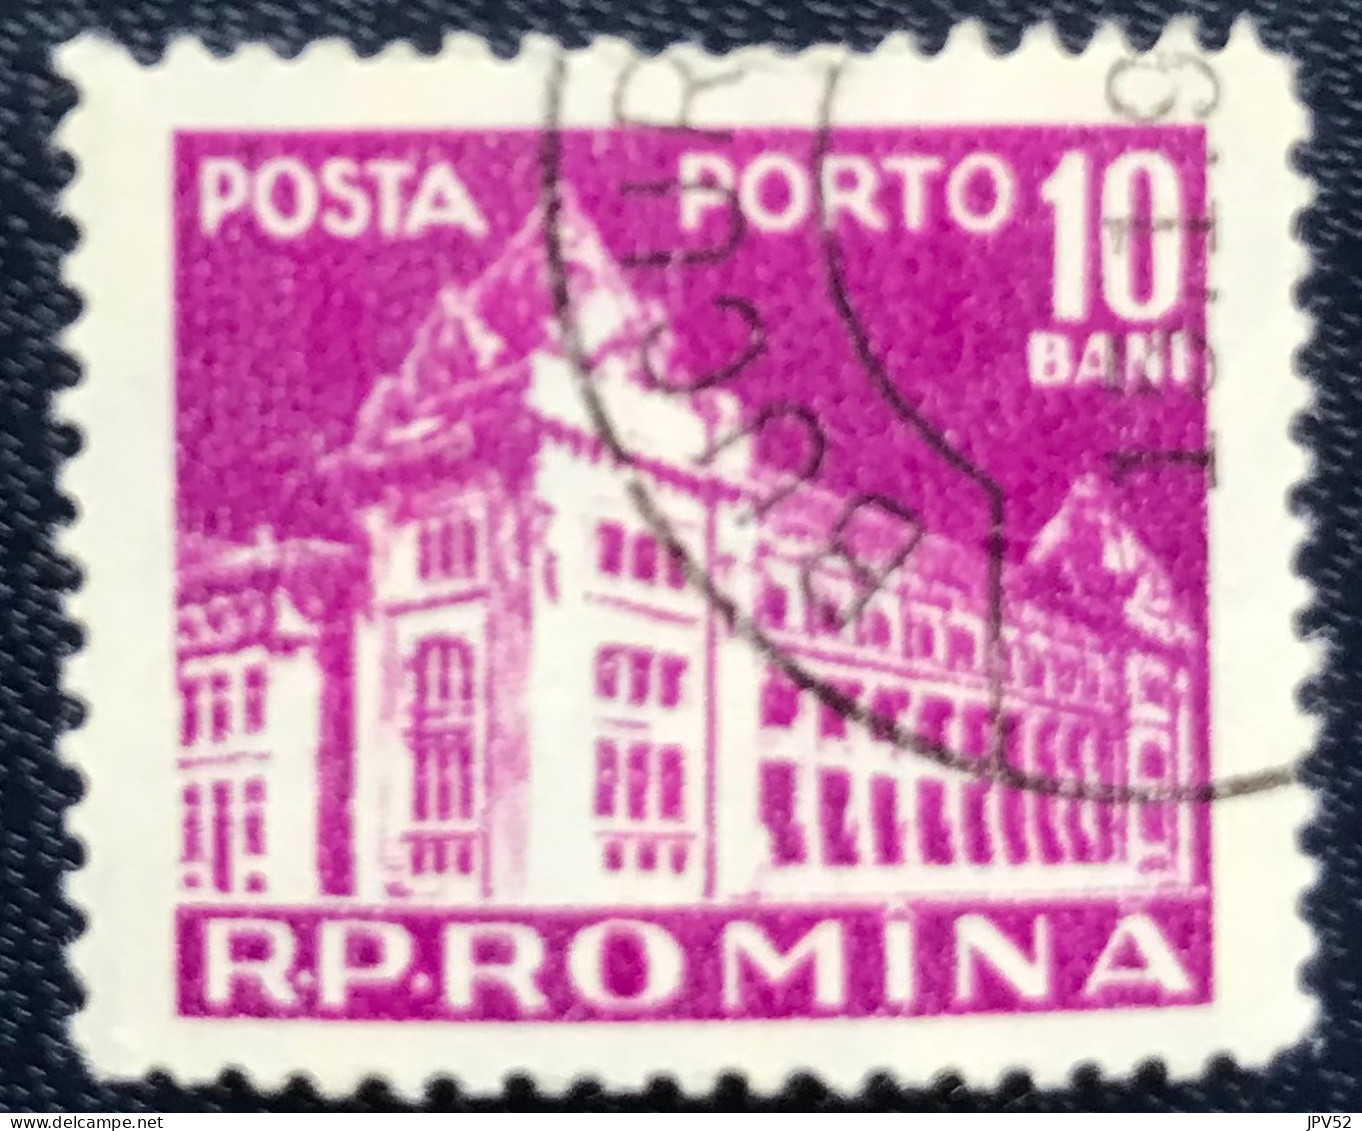 Romana - Roemenië - C14/54 - 1957 - (°)used - Michel 103 - Postkantoor - Strafport